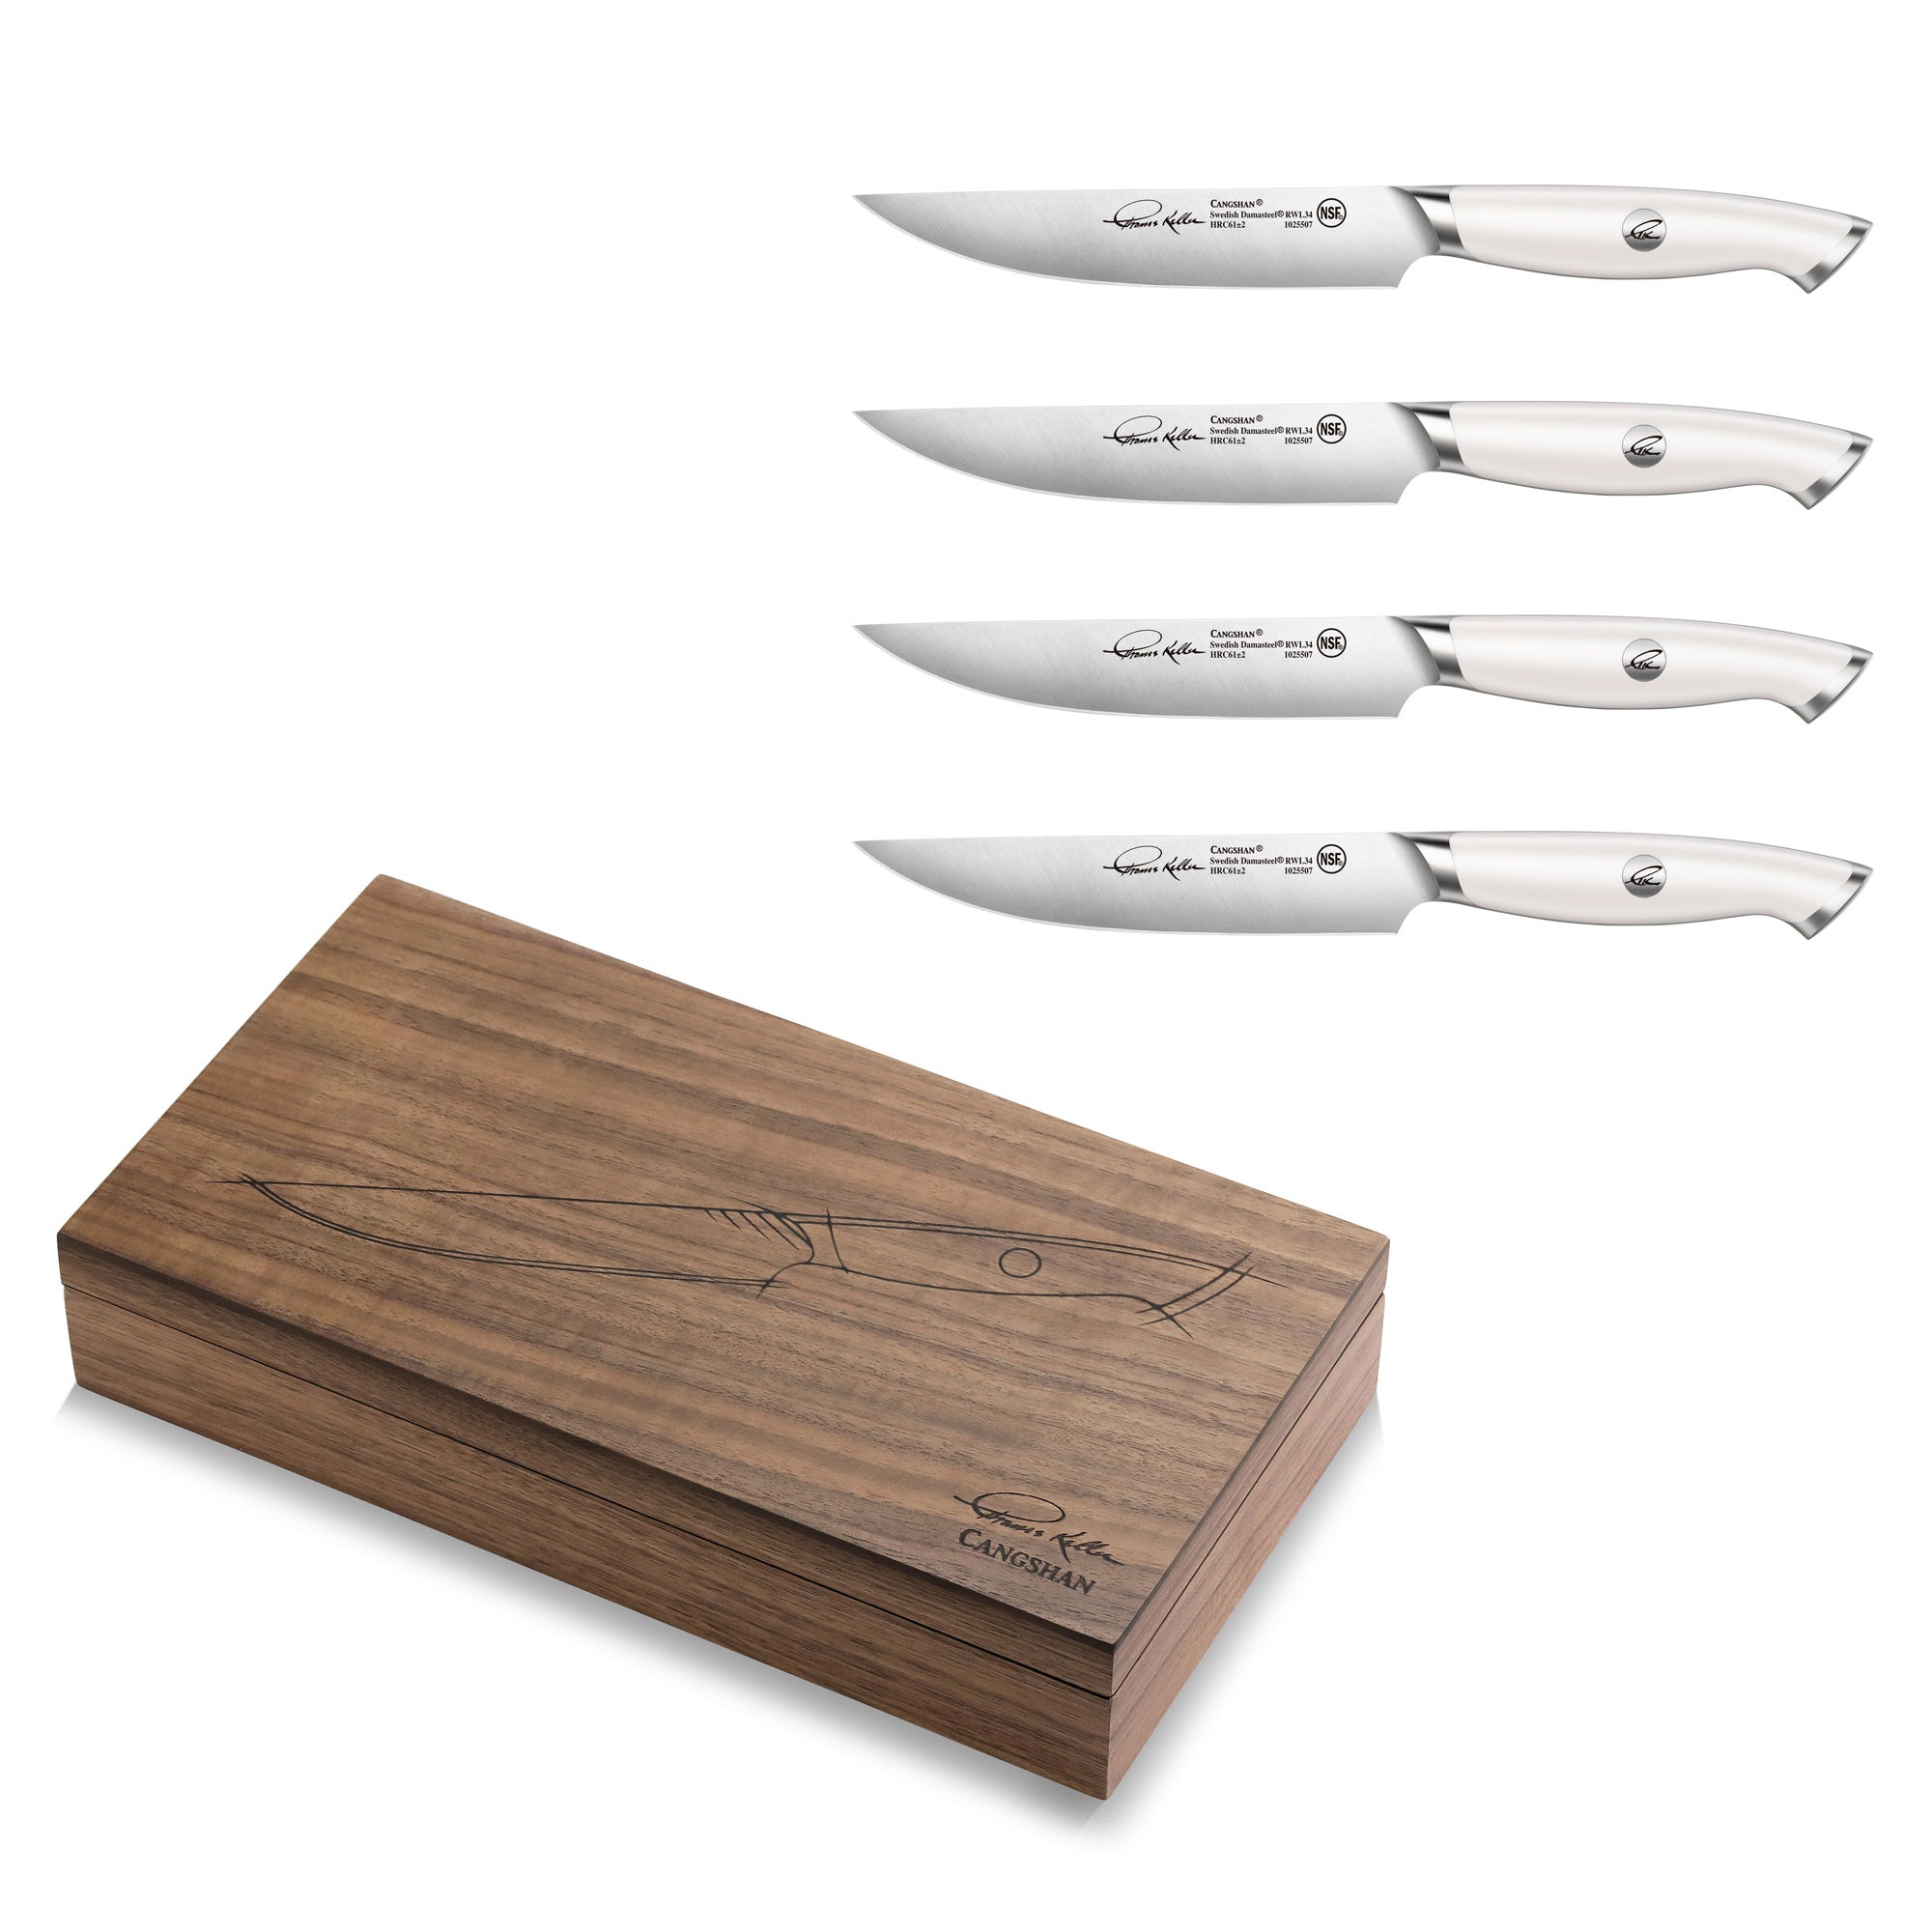 Thomas Keller Signature Collection 4-piece Steak Knife Set, White